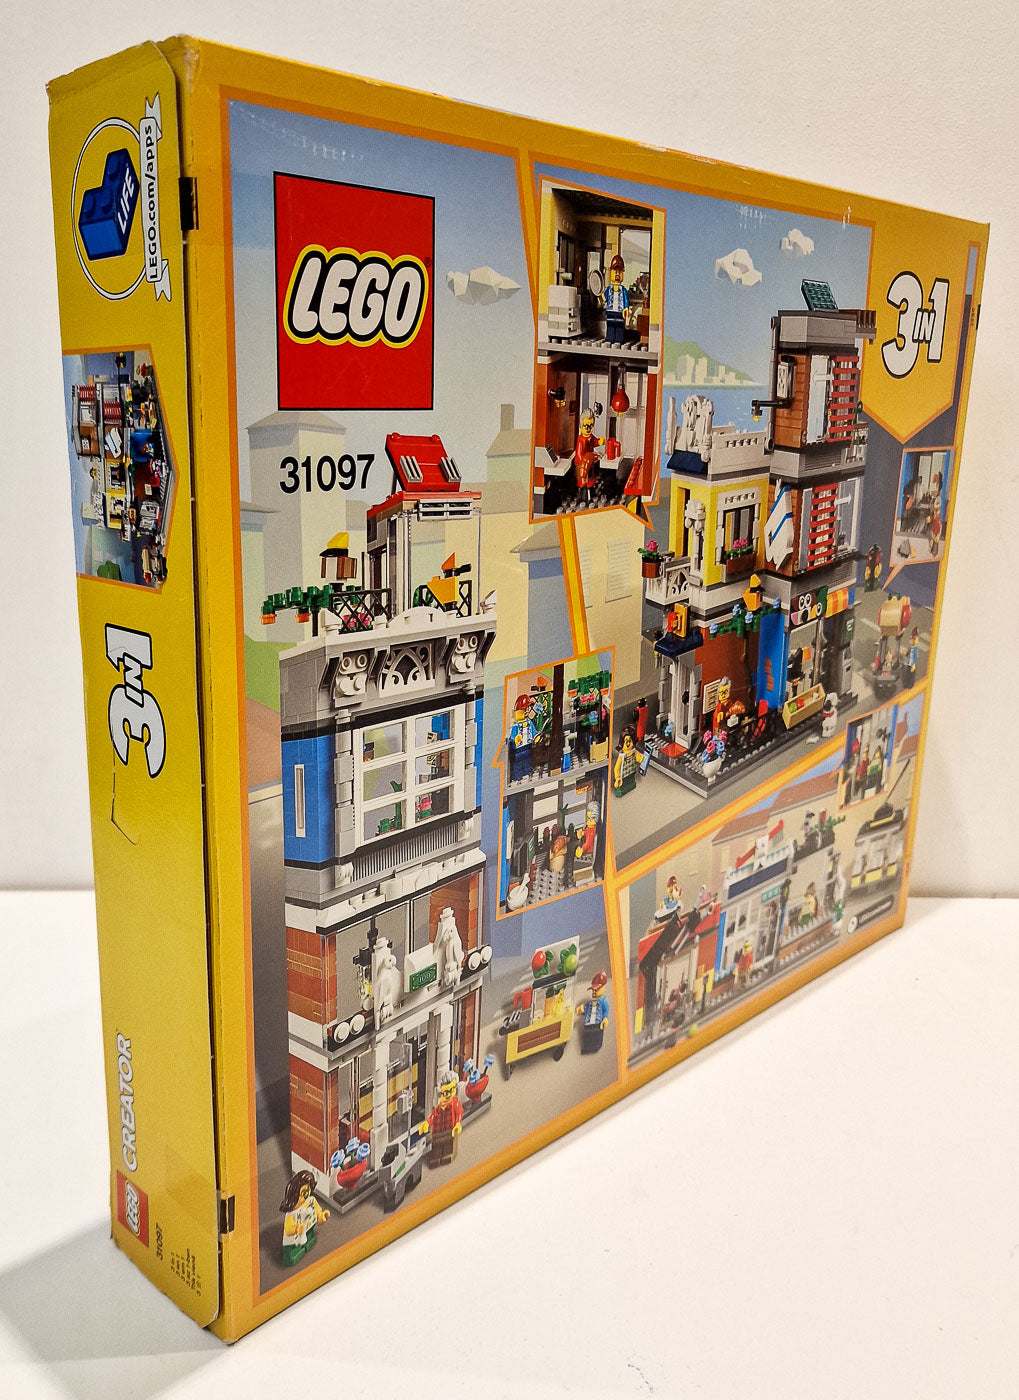 LEGO 31097 Creator 3 in 1 Townhouse Pet Shop and Café